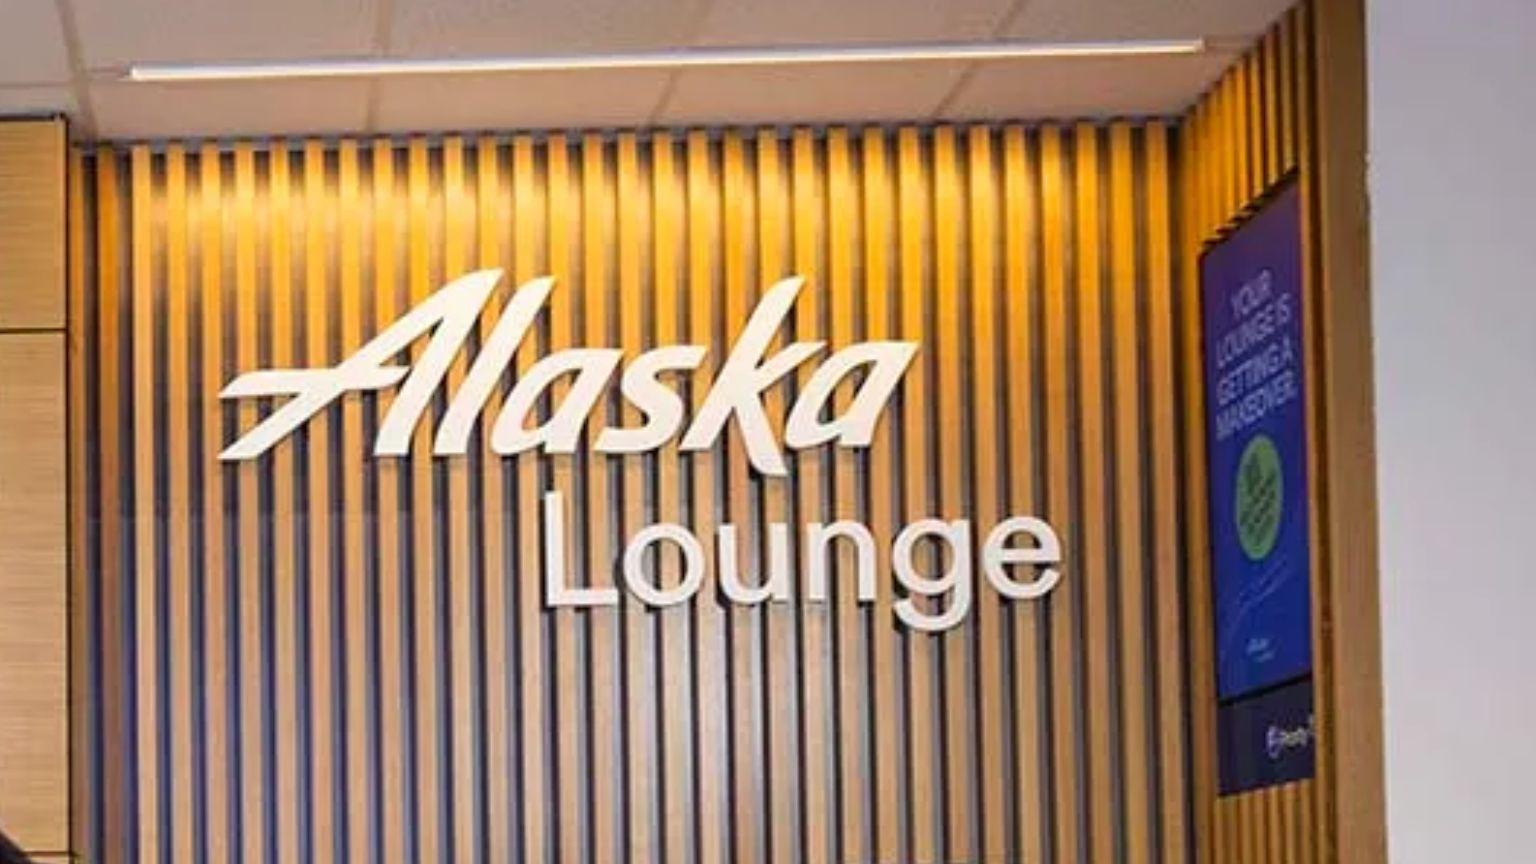 Alaska Lounge Seattle Airport, Concourse D